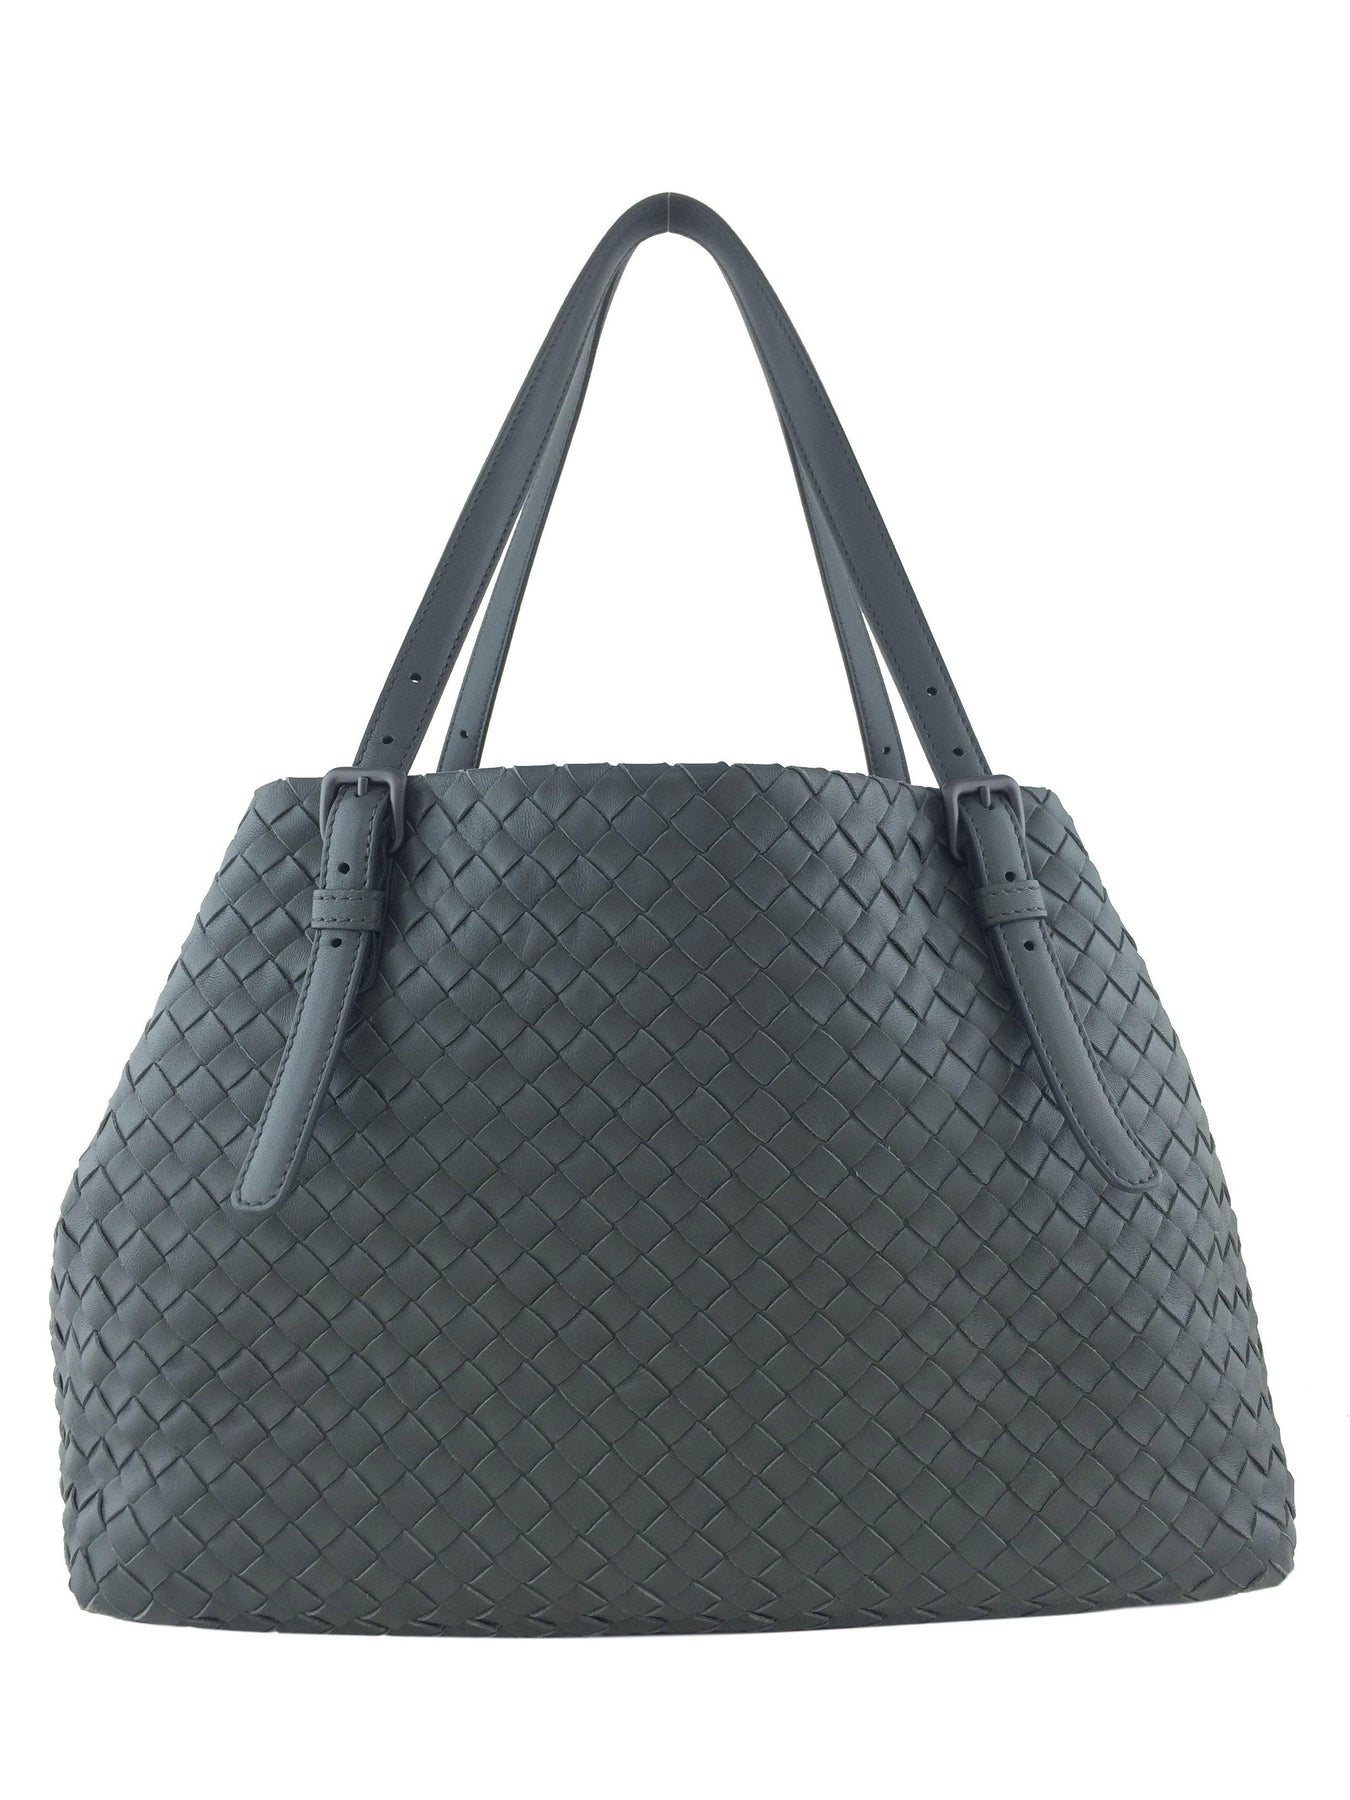 Bottega Veneta Intrecciato Medium A-Shape Tote Bag - Consigned Designs